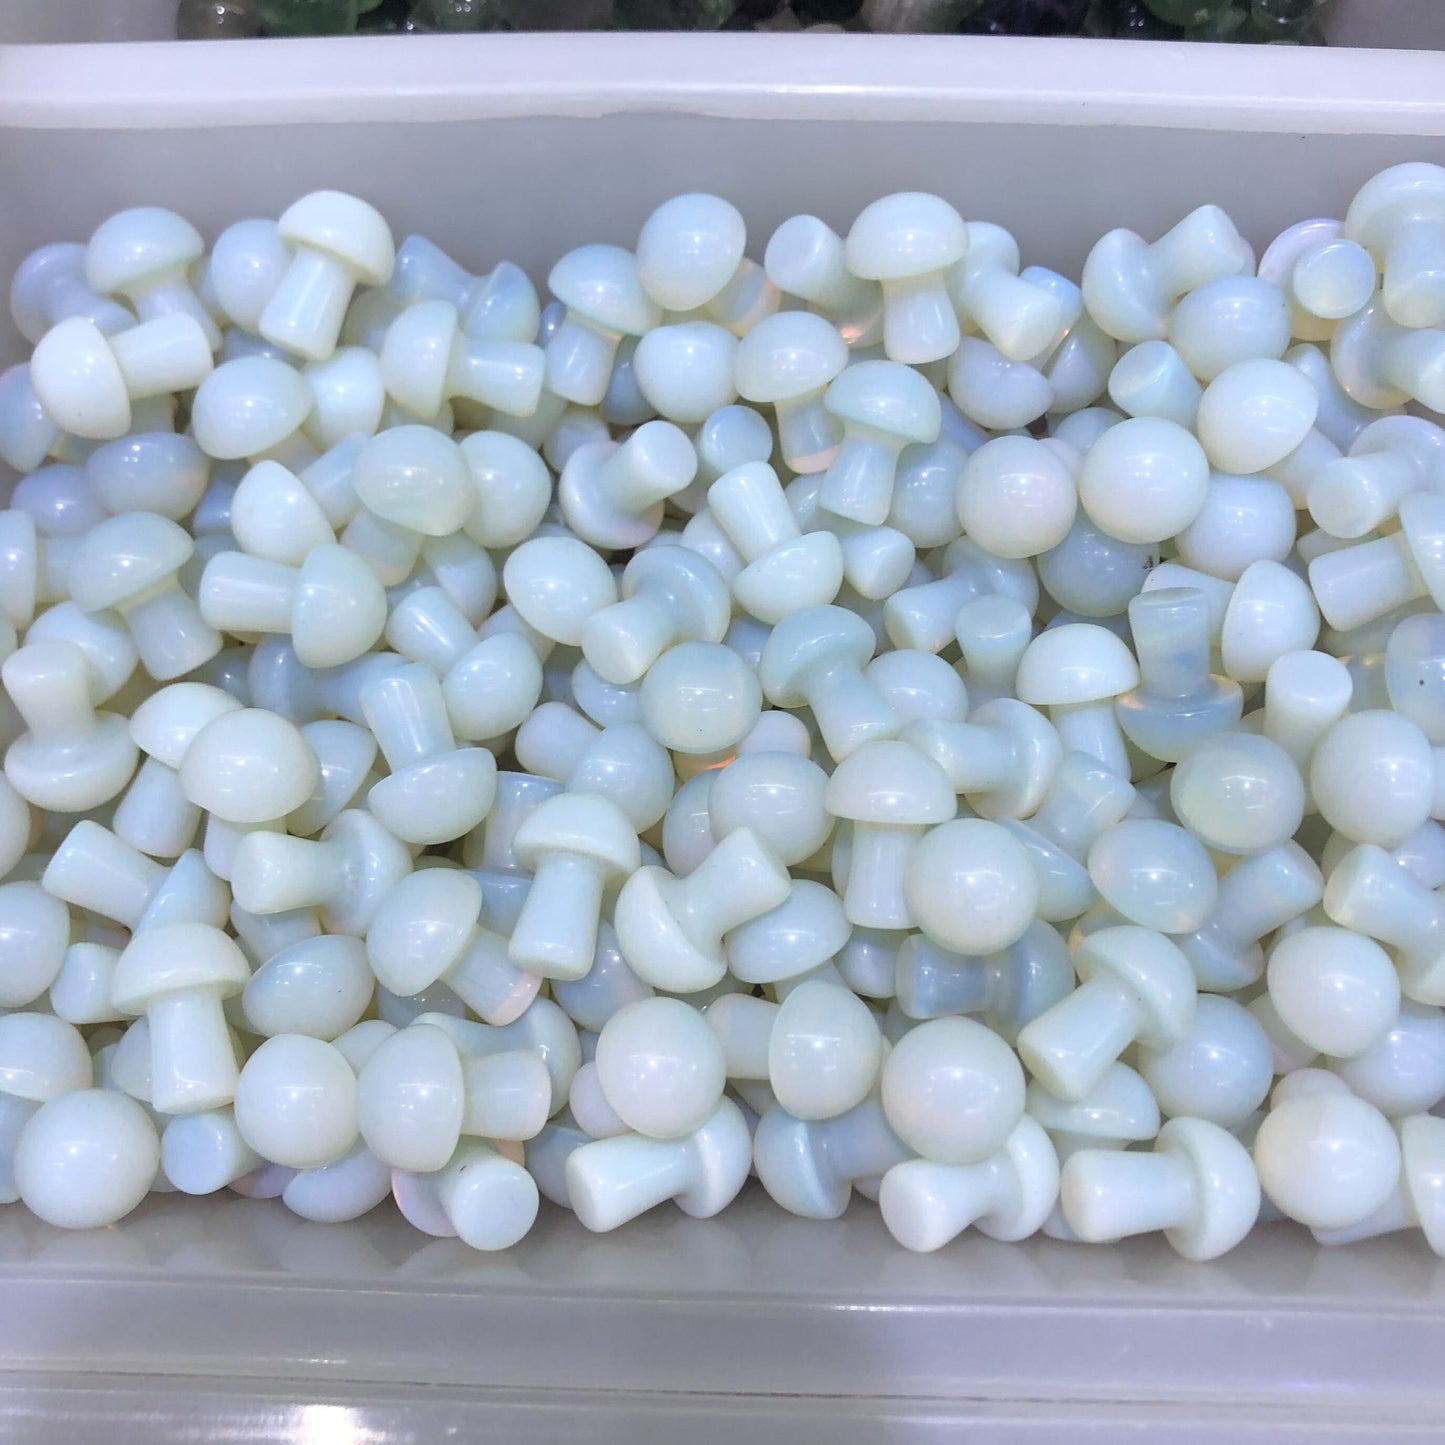 Opal Mushroom Shaped Polished Stones Decor Set - 10Pcs Healing Gifts with Decorative Quartz Crystals